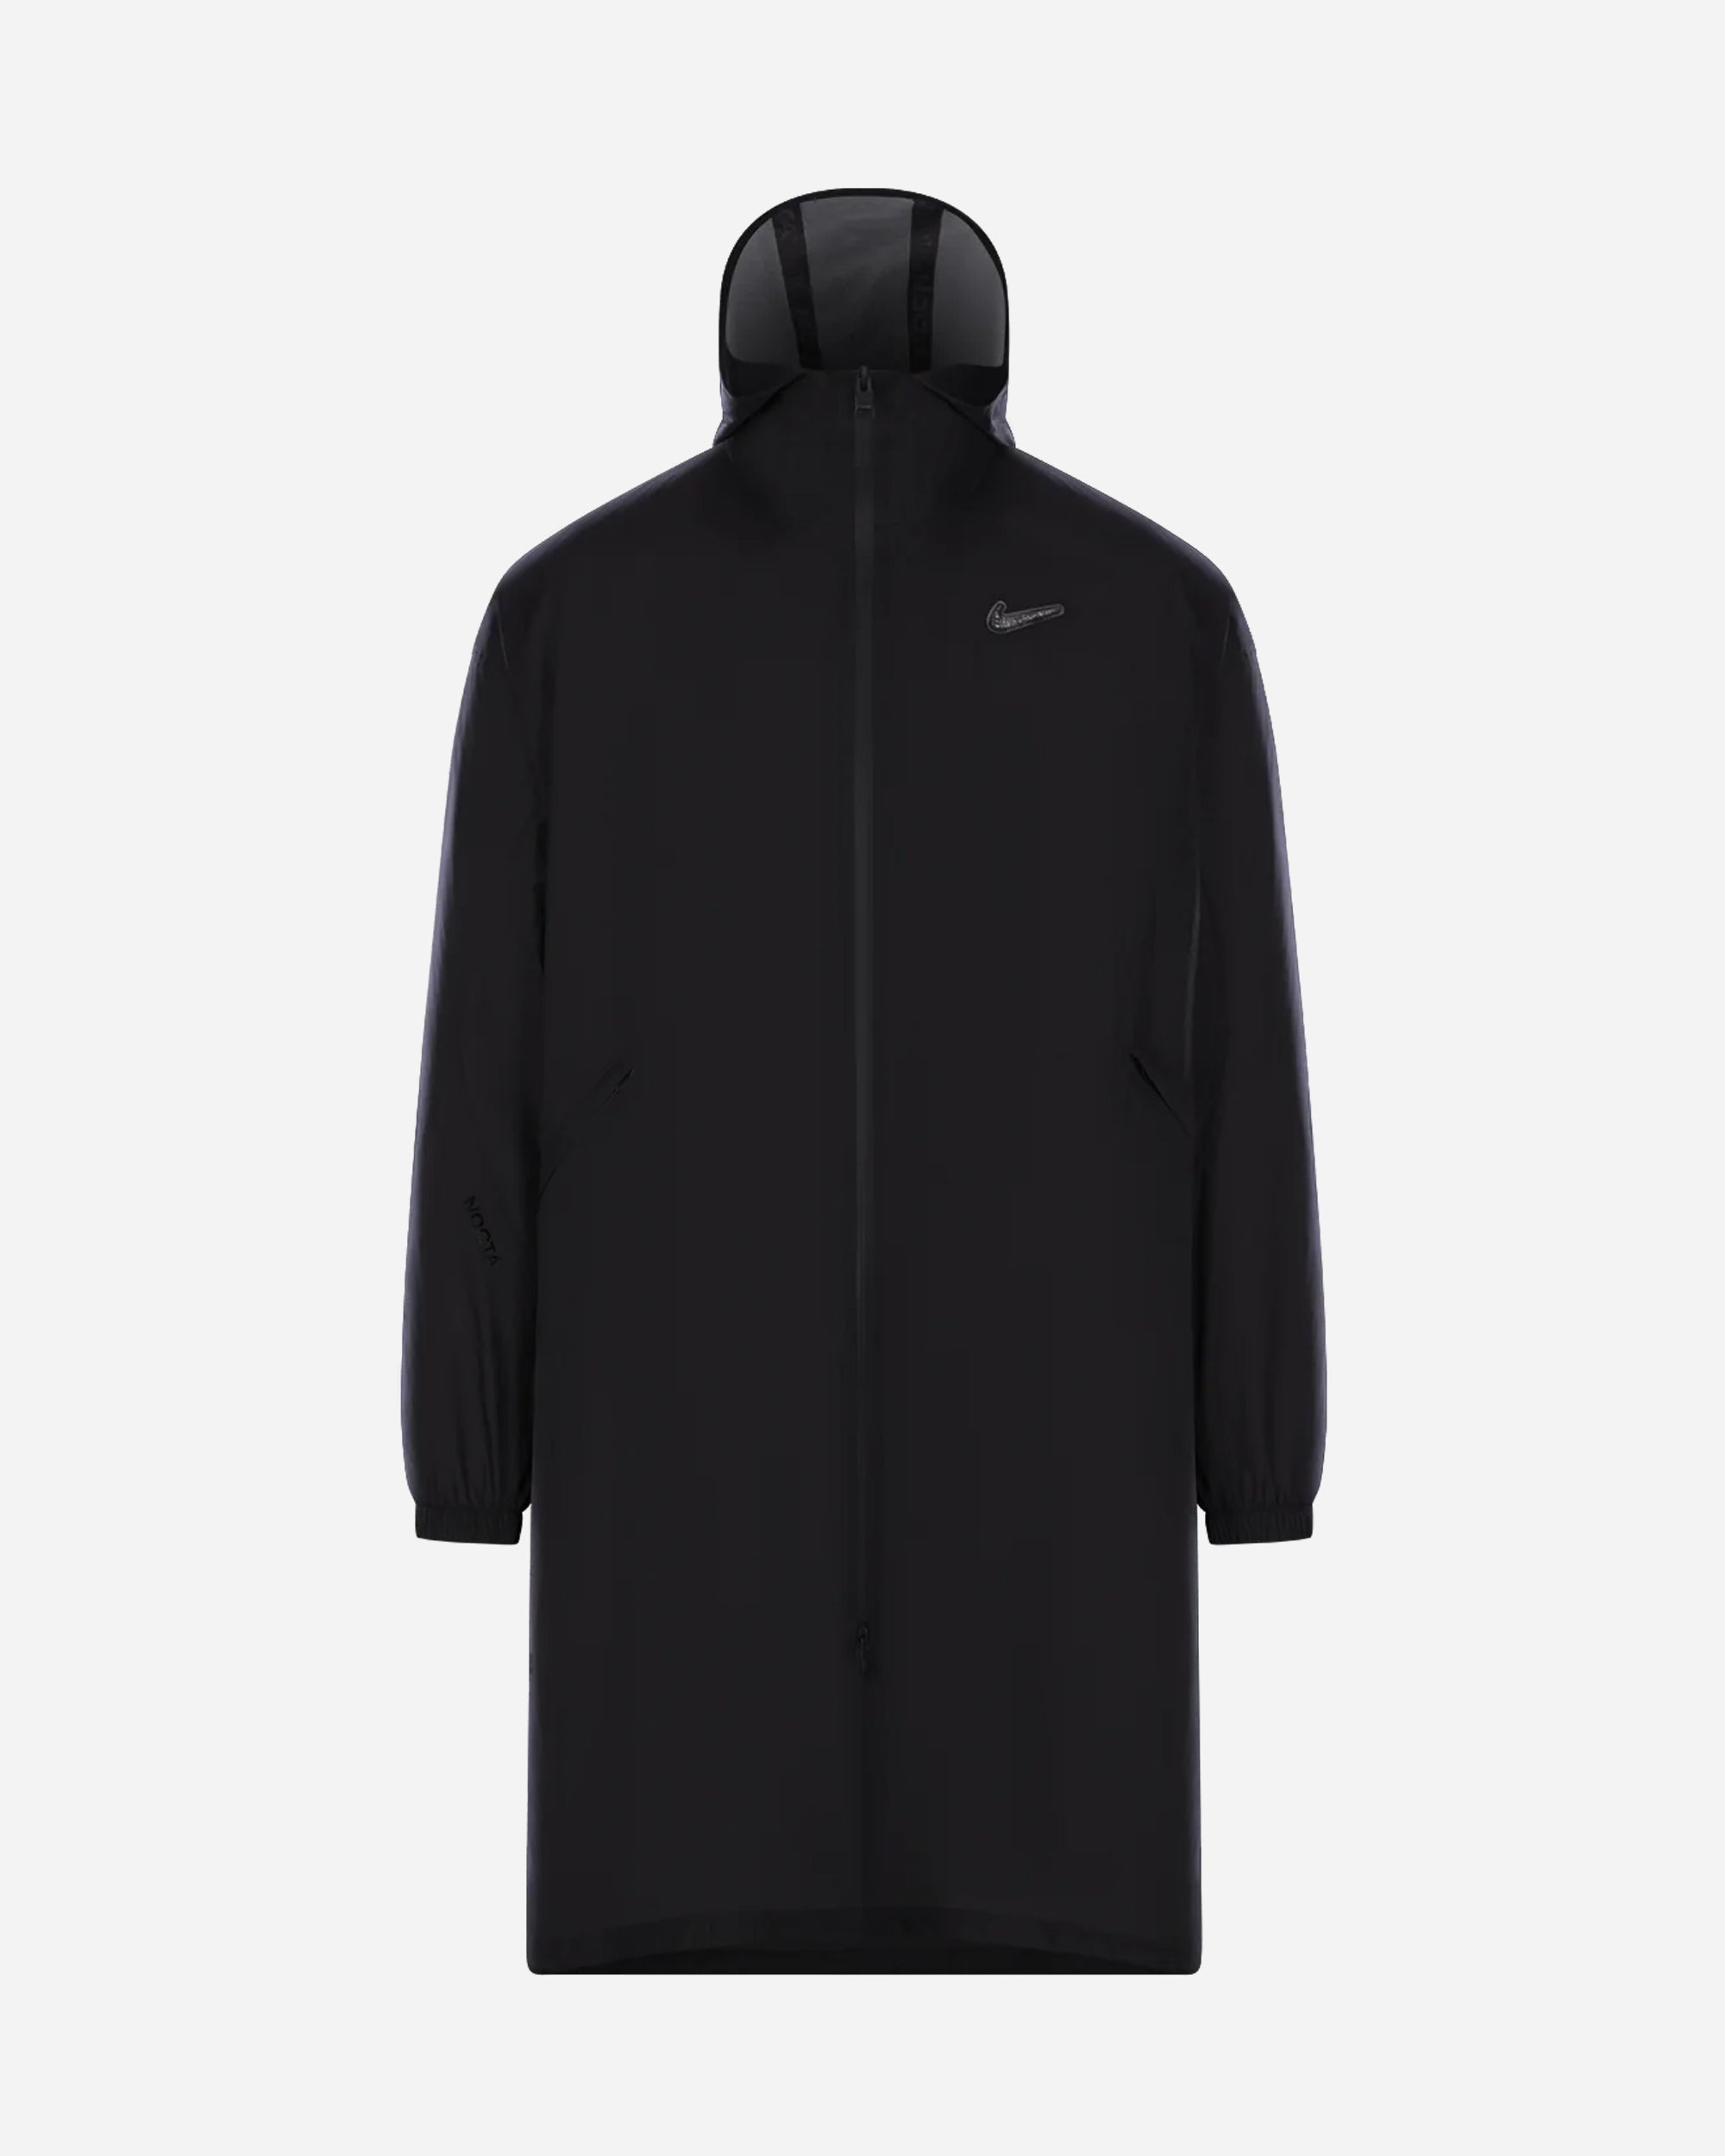 NIKE QS/TZ Nike x NOCTA Jacket BLACK/BLACK DR2678-010